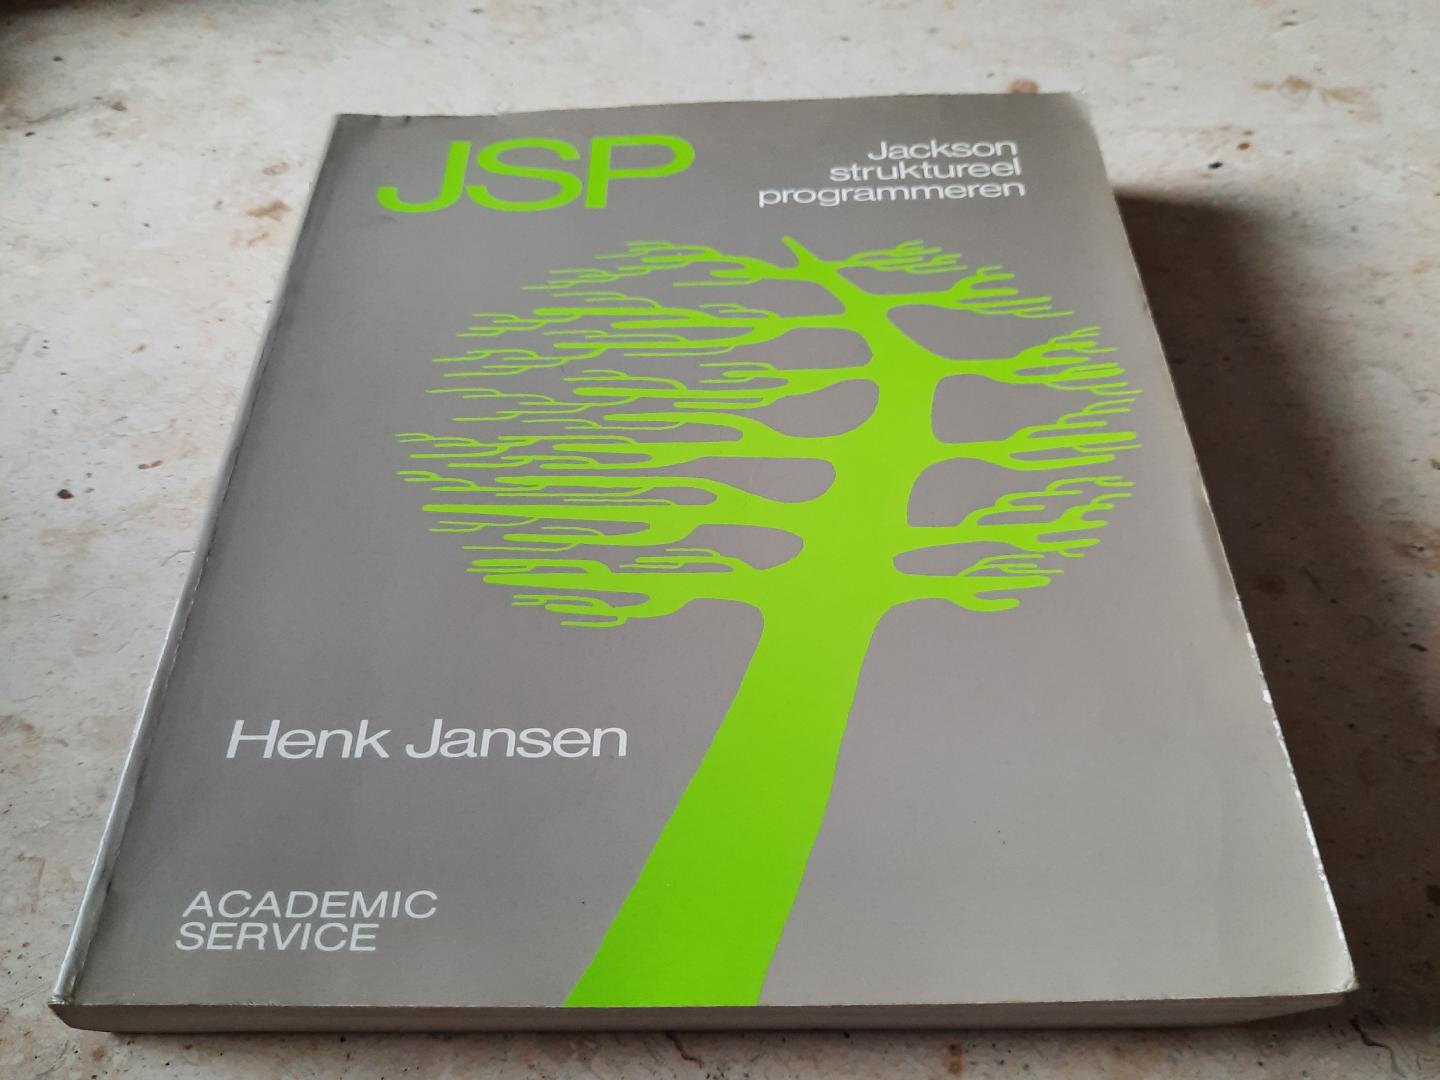 Jansen Henk - Jsp jackson struktureel programmeren / druk 3